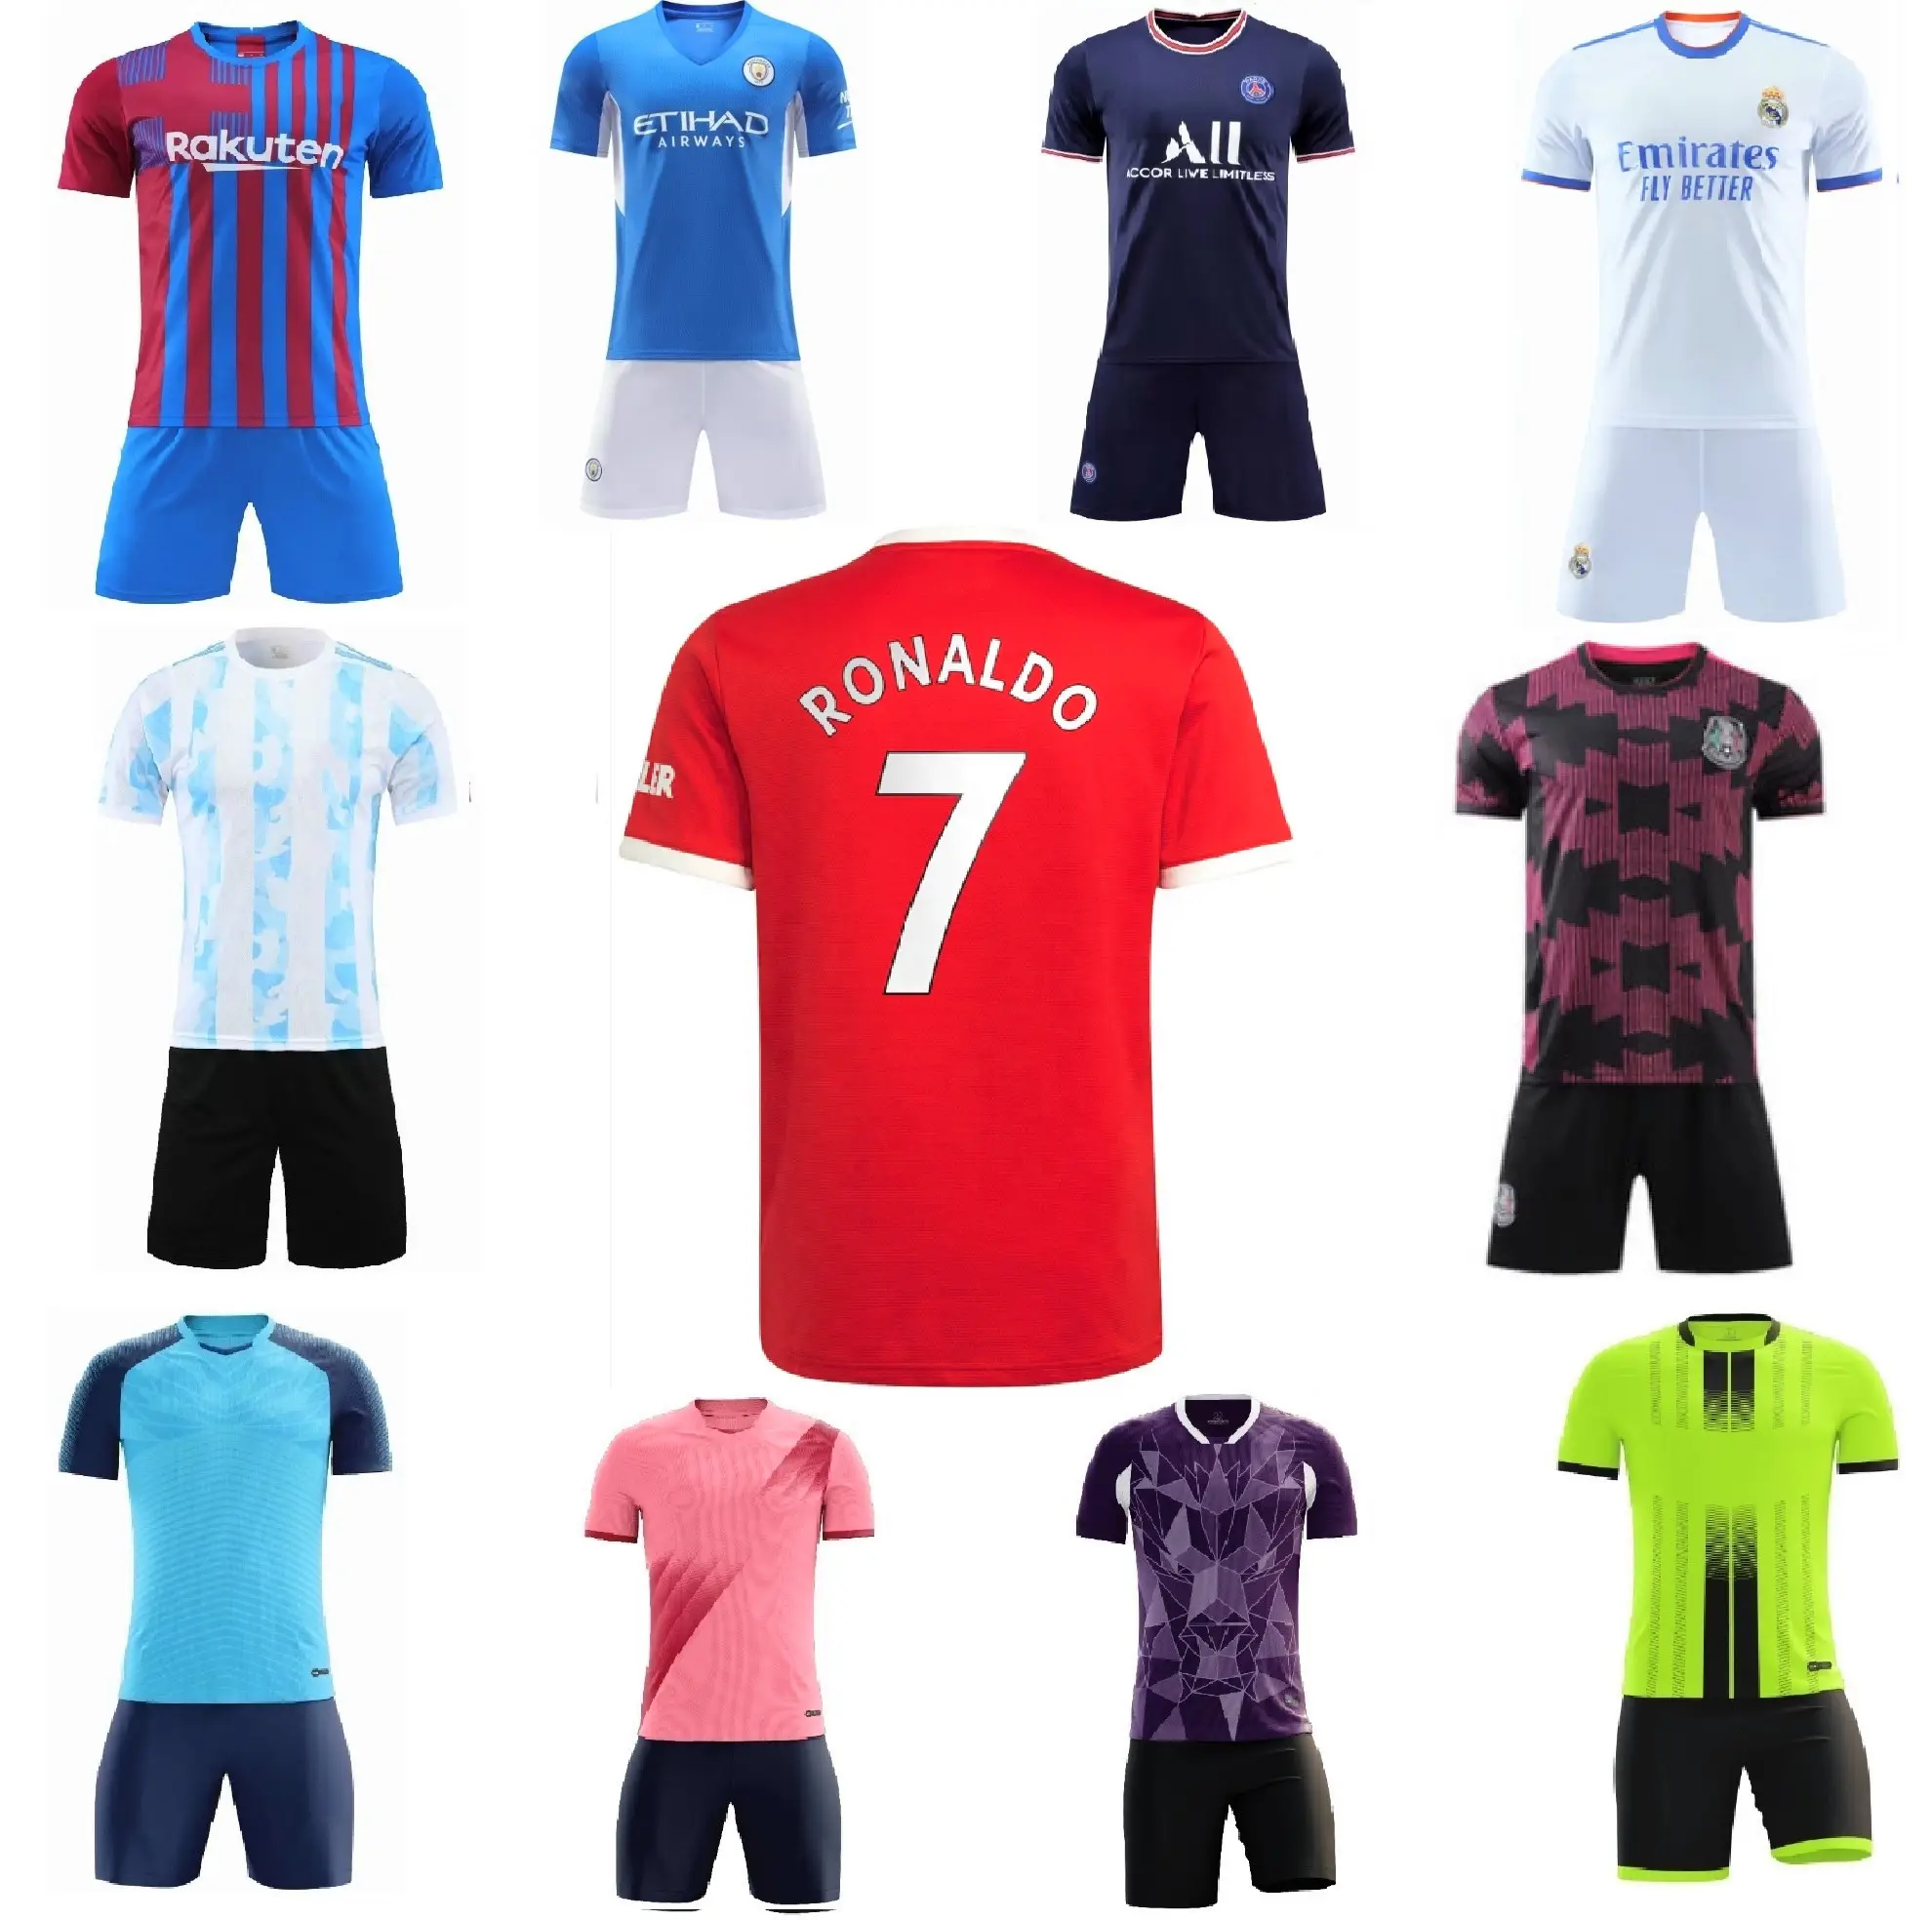 Camiseta de fútbol, uniforme, camisetas de fútbol, club europeo, secado rápido, 2021, 2022